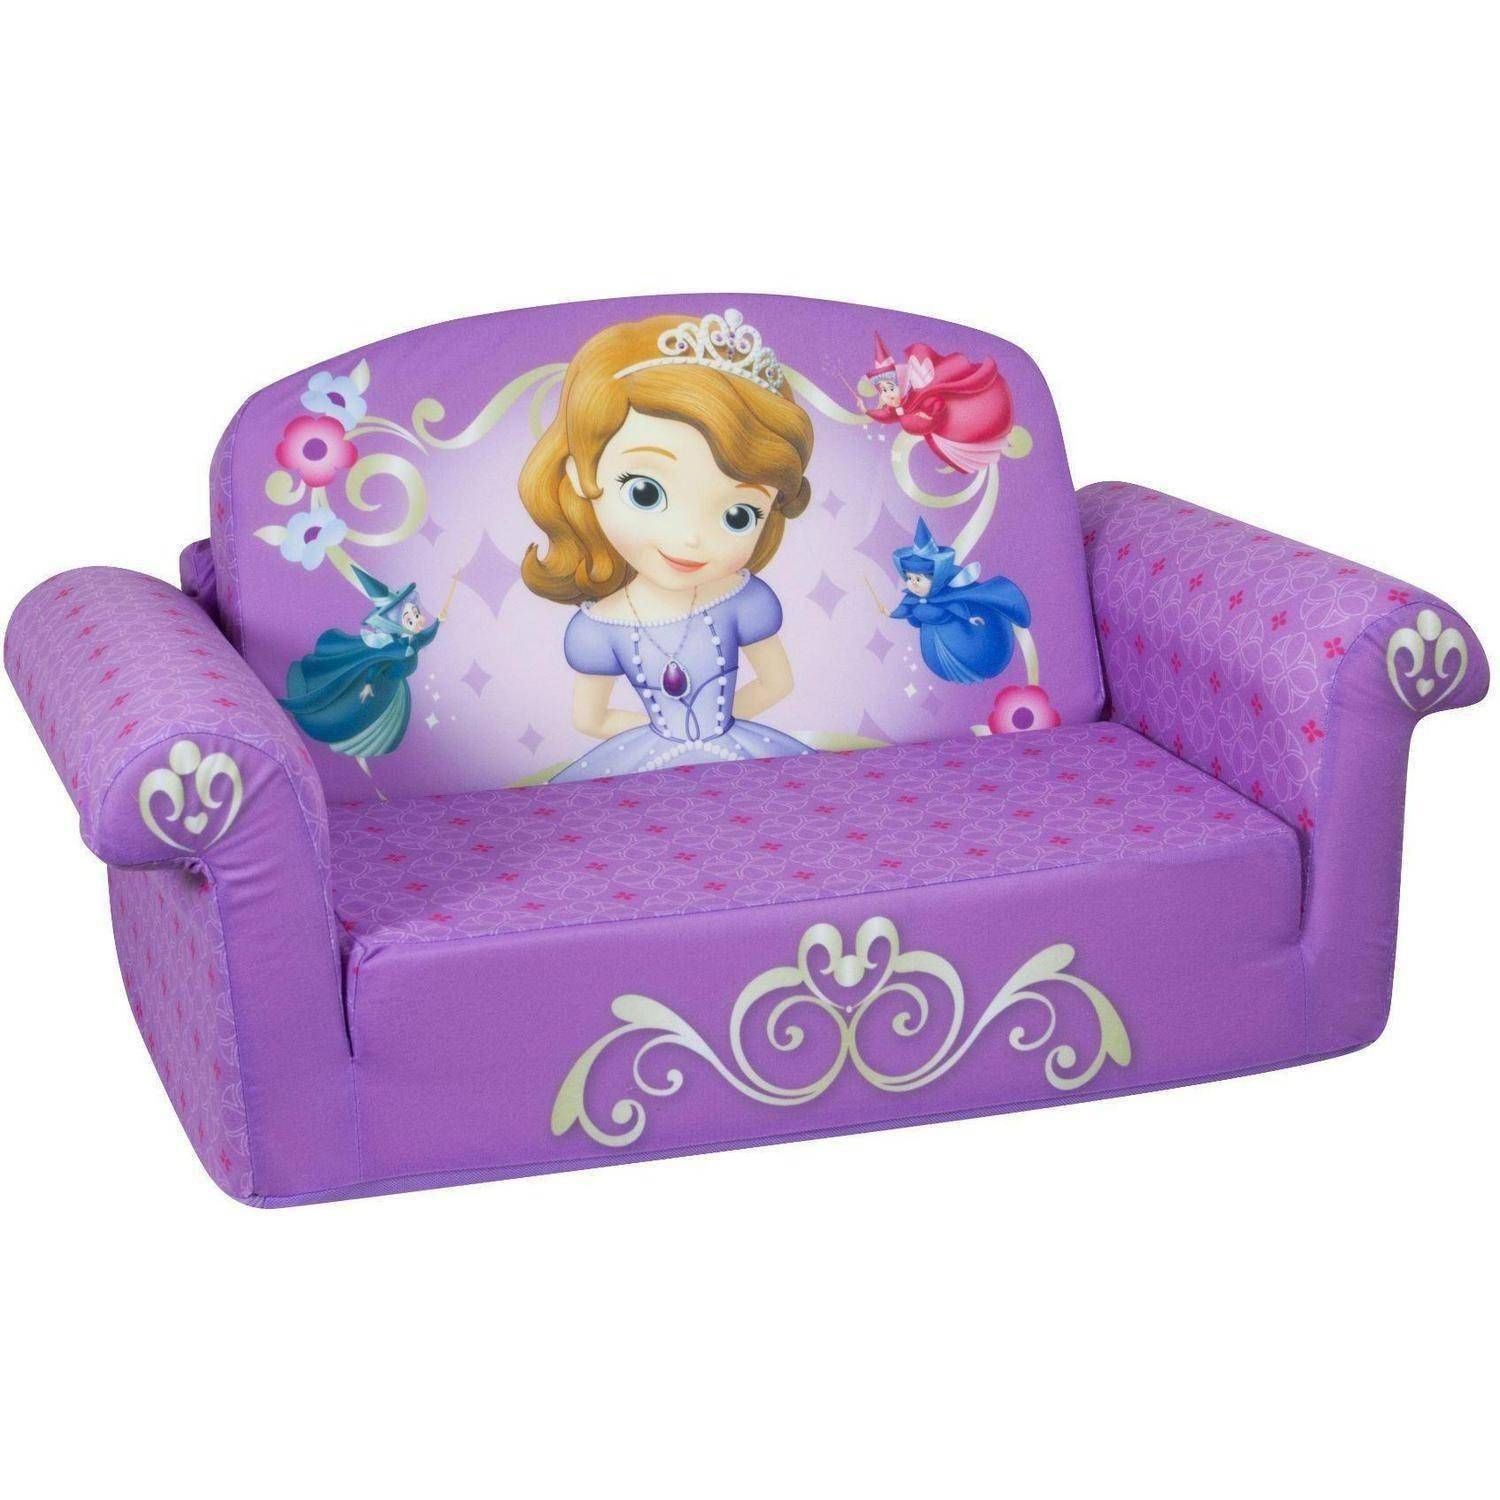 20 Top Princess Flip Open Sofas | Sofa Ideas Regarding Disney Sofas (View 14 of 15)